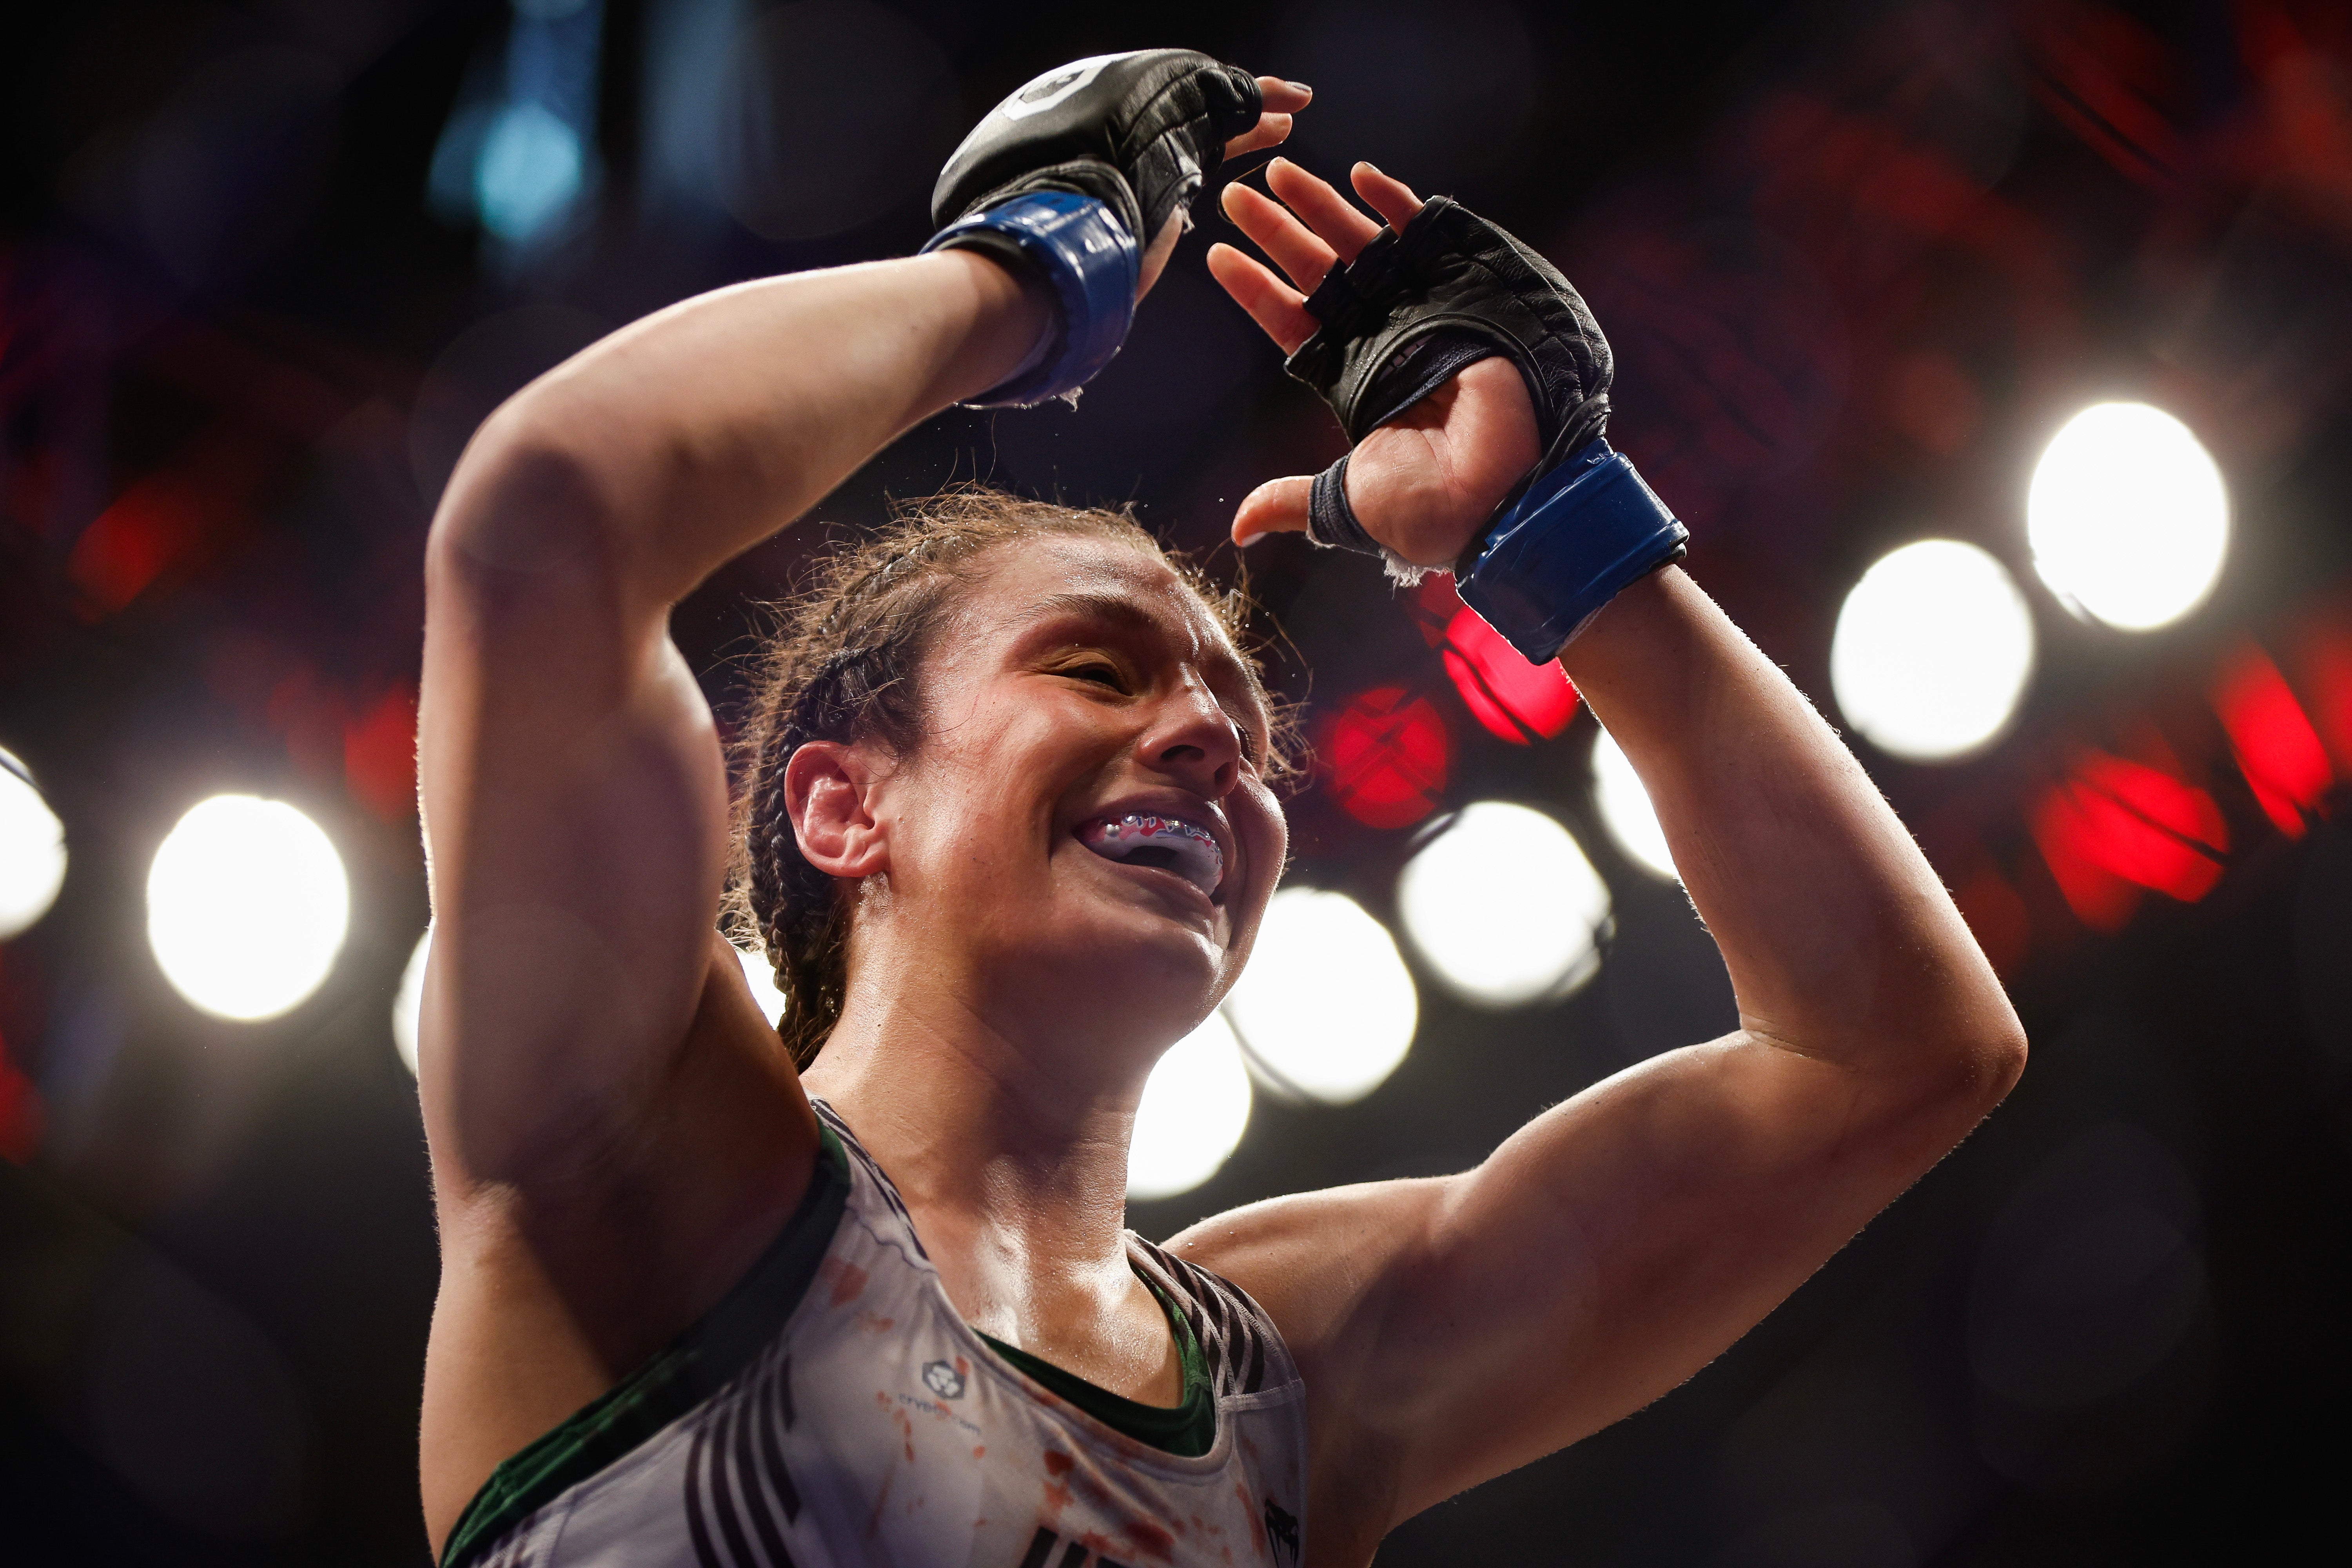 Alexa Grasso celebrates winning the women’s flyweight title